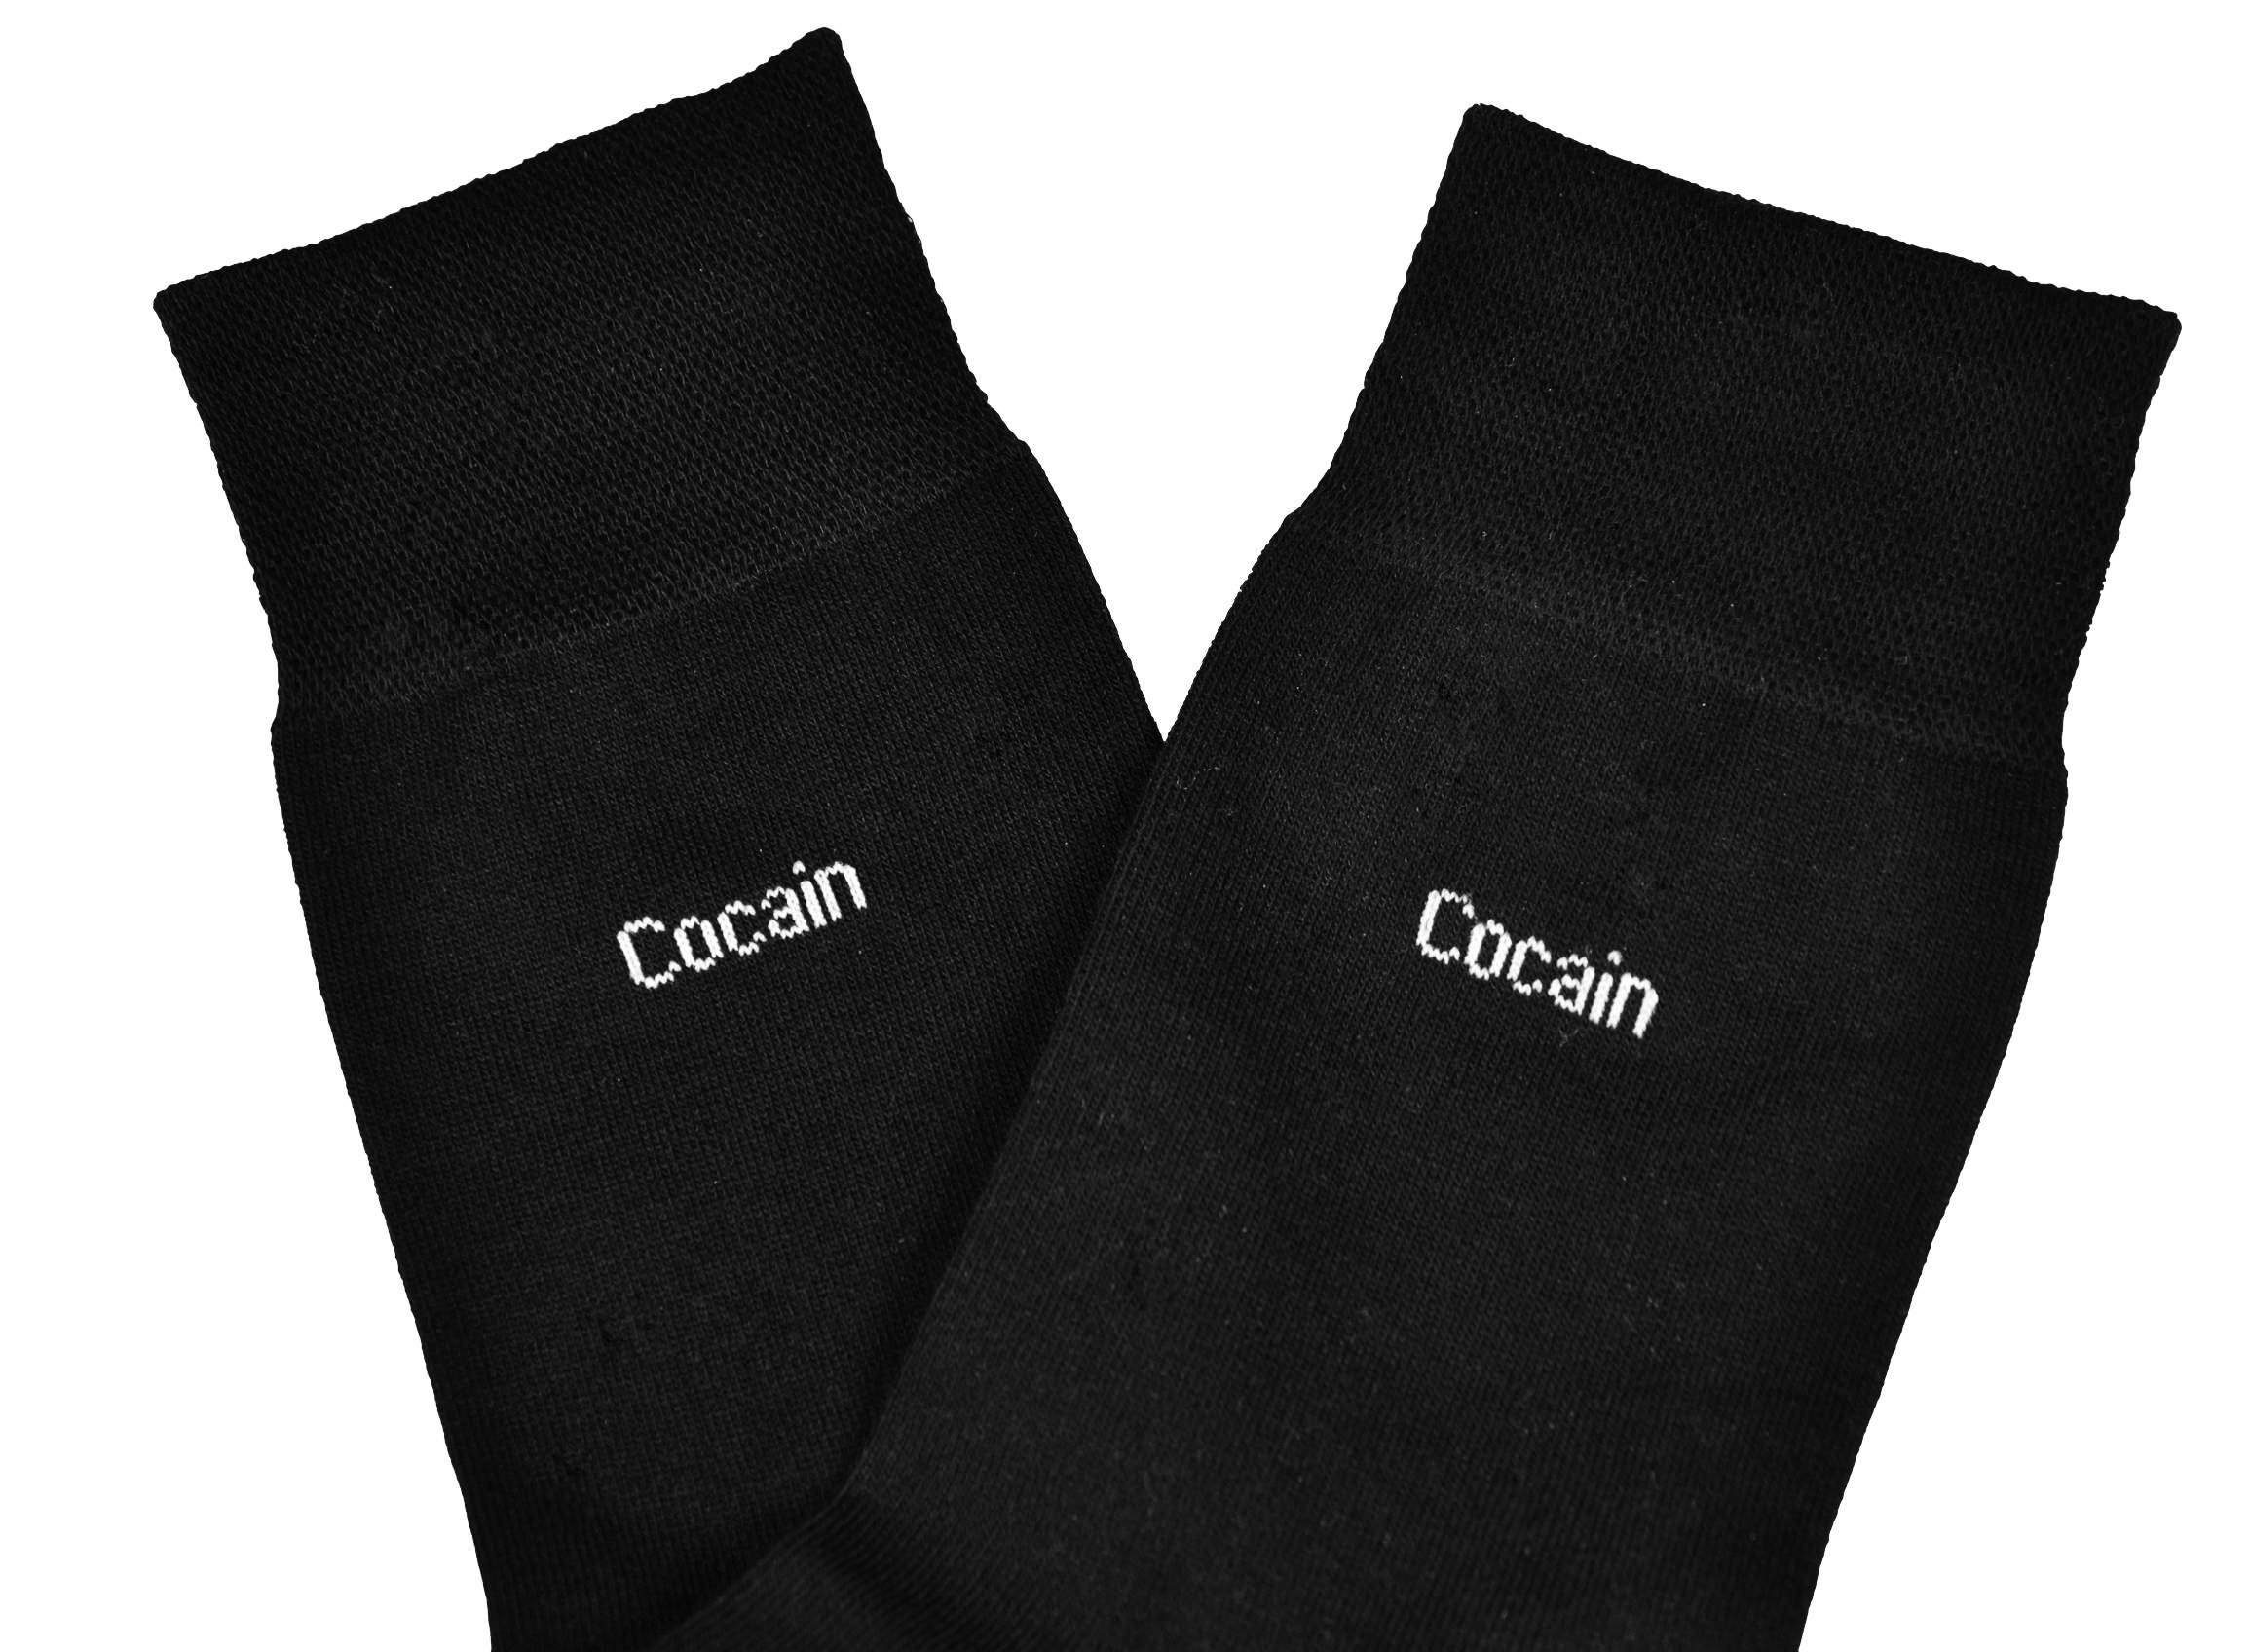 9 (9-Paar) Nadelqualität & underwear Socken 200 Businesssocken in Herren handgekettelt schwarz Damen Cocain Paar